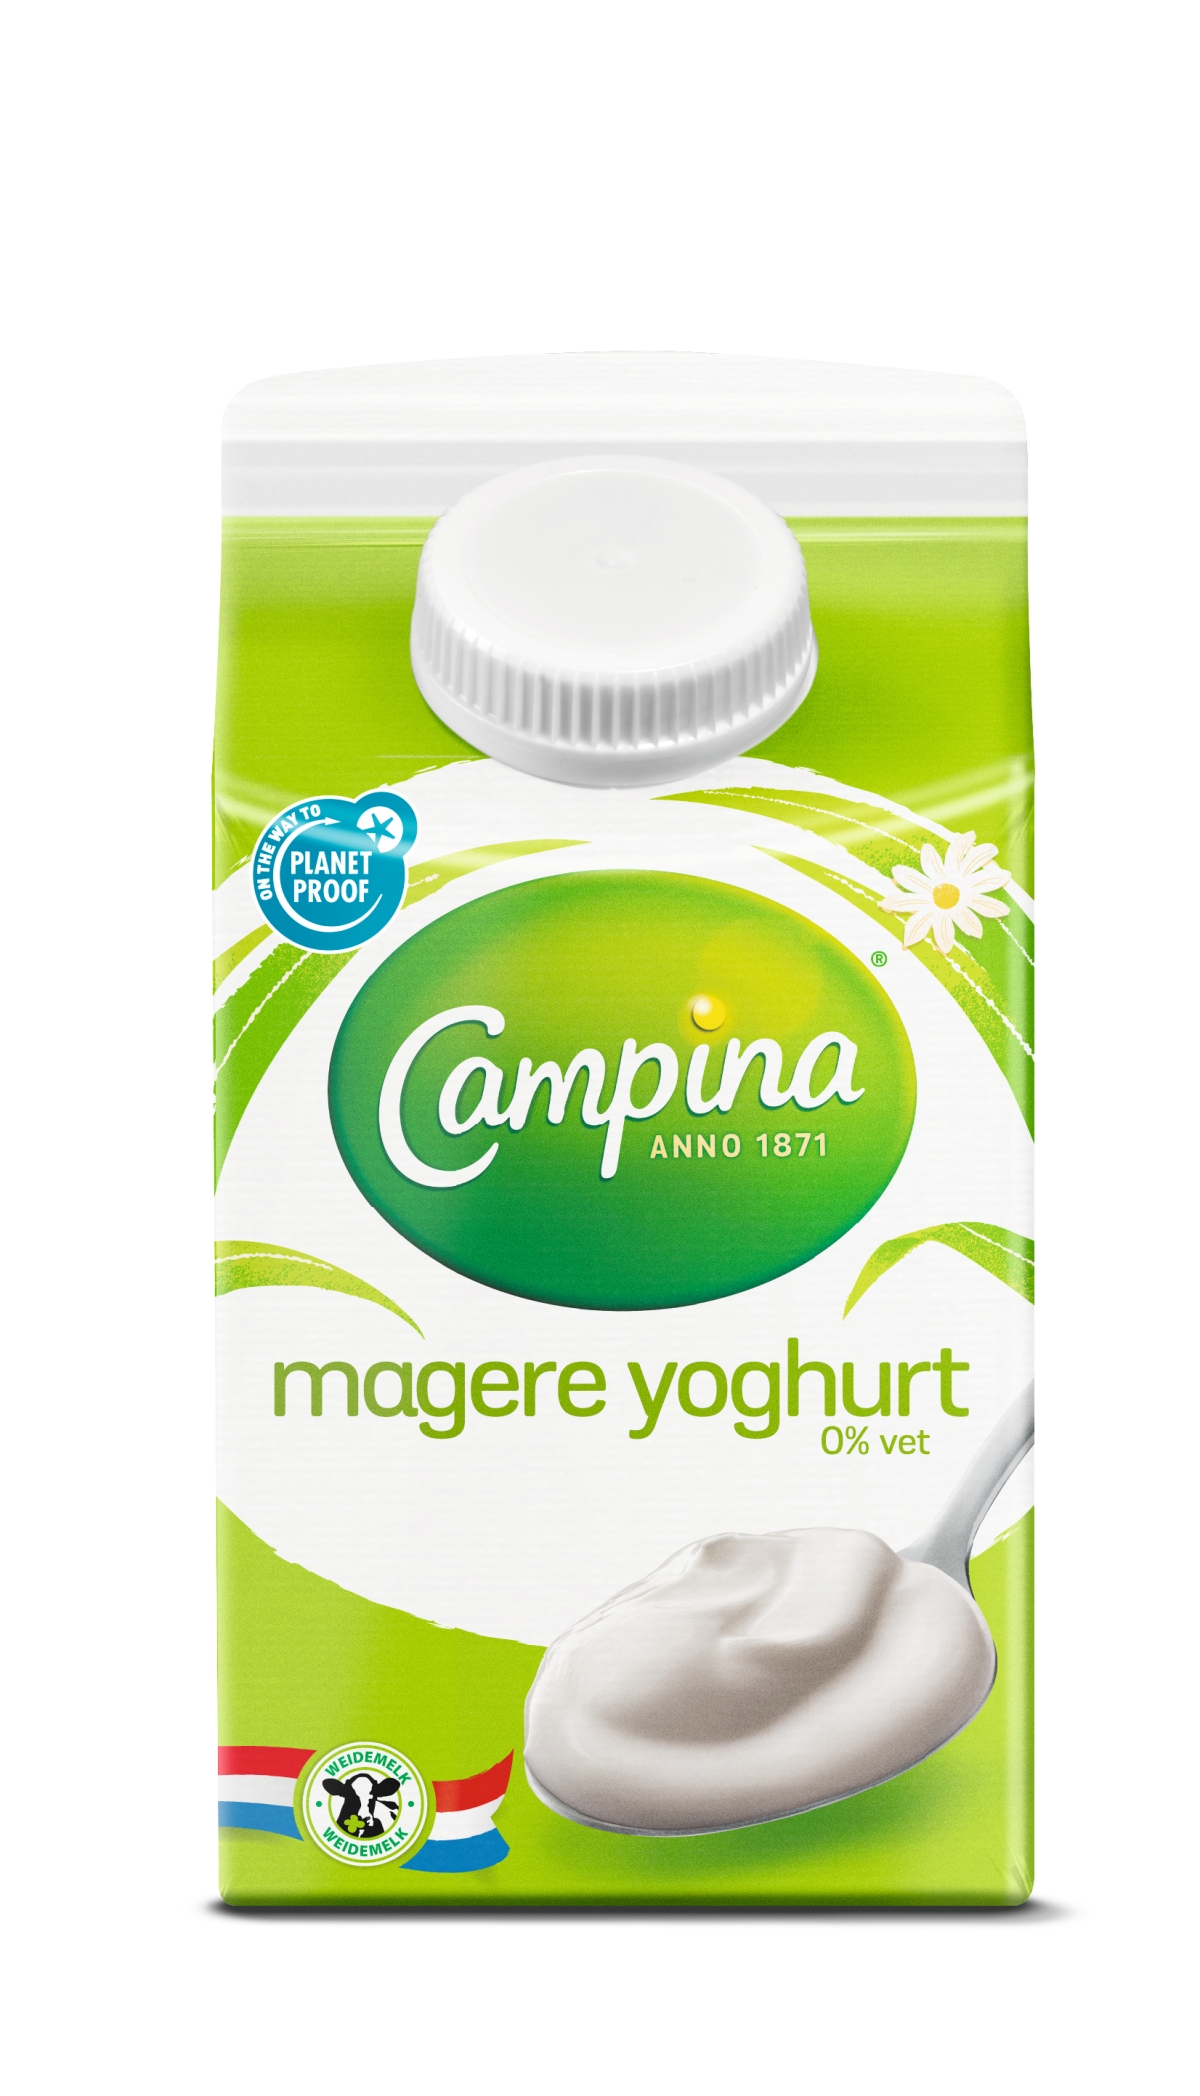 Magere yoghurt 500ml